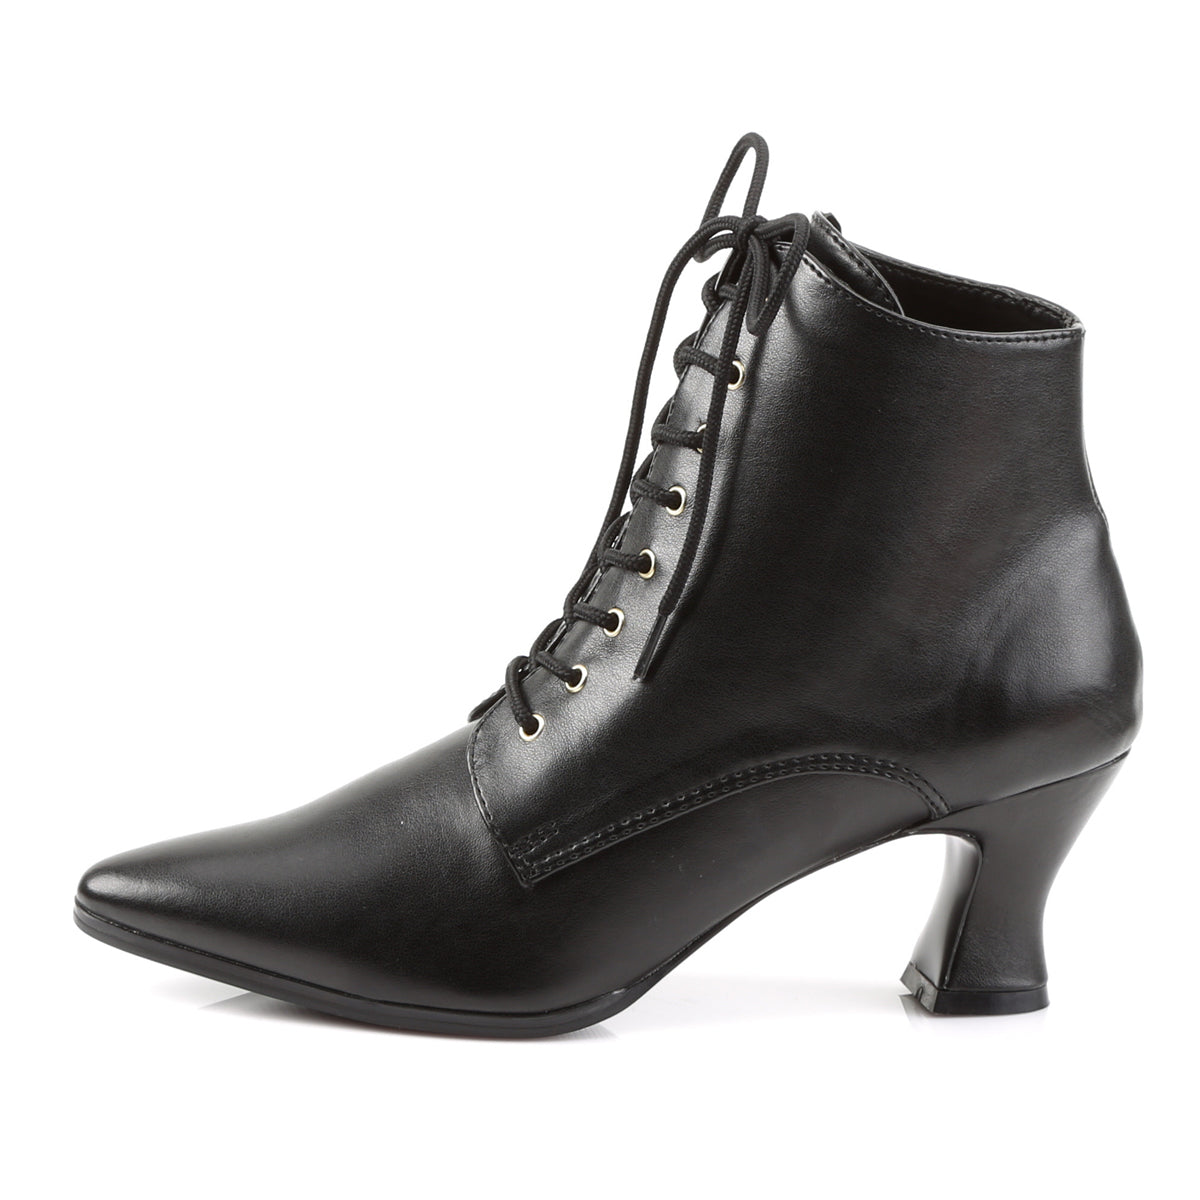 VICTORIAN-35 3 Inch Heel Black Women's Boots Funtasma Costume Shoes 